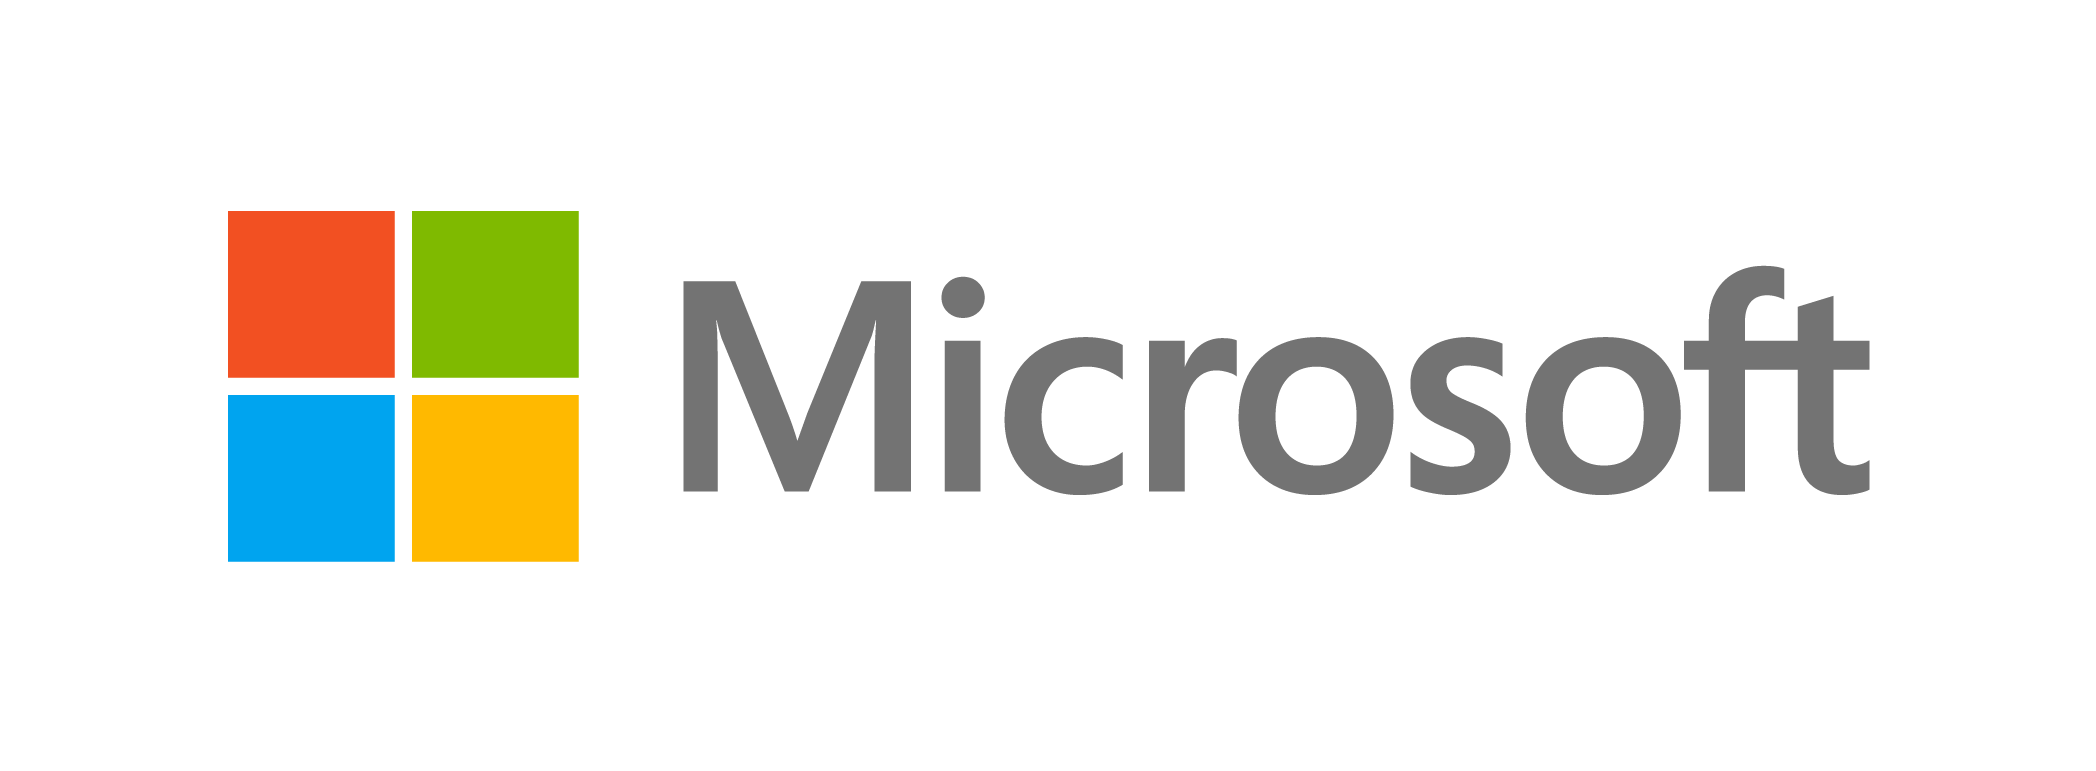 Microsoft logo PNG images 